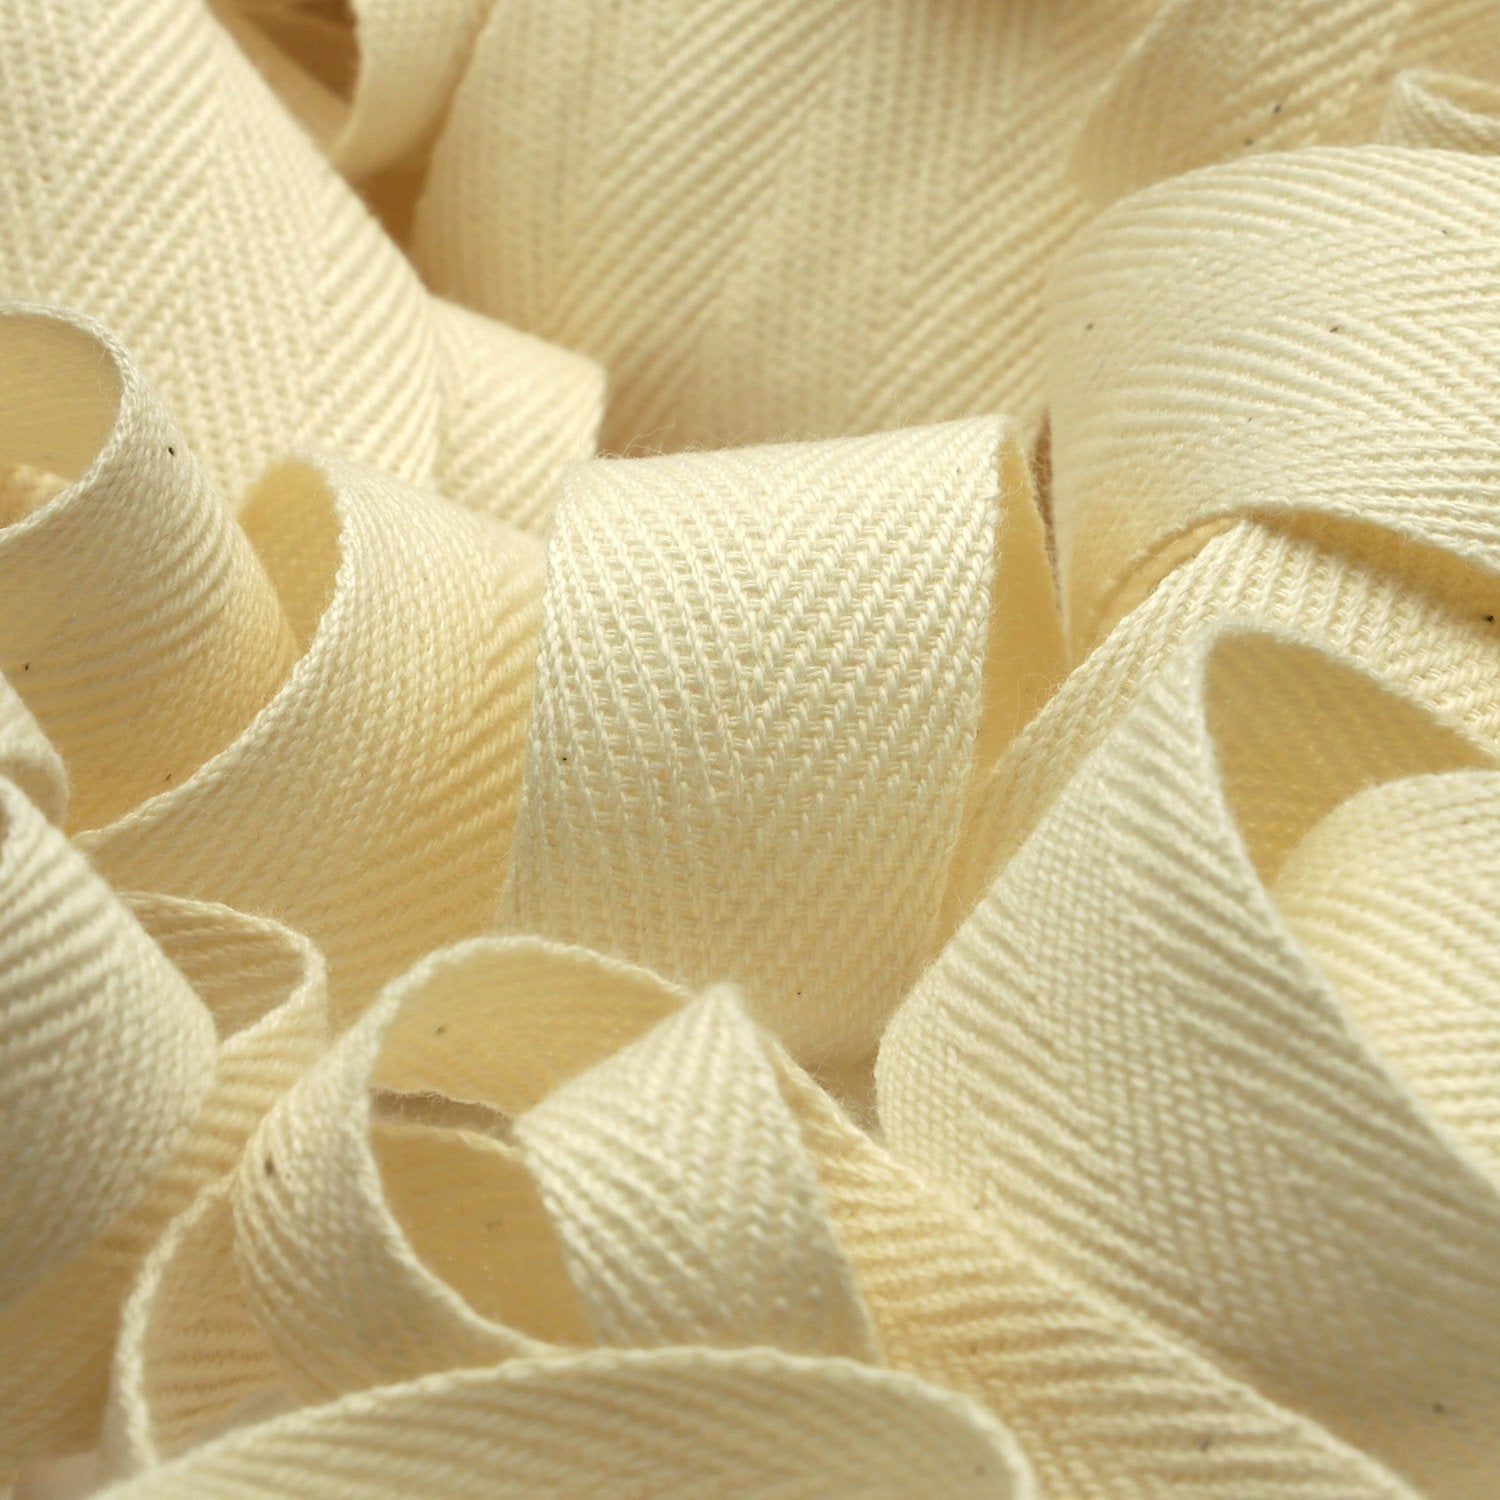 FUJIYAMA RIBBON Organic Cotton Herringbone Ribbon 50mm Ecru 9.14 Meters Roll